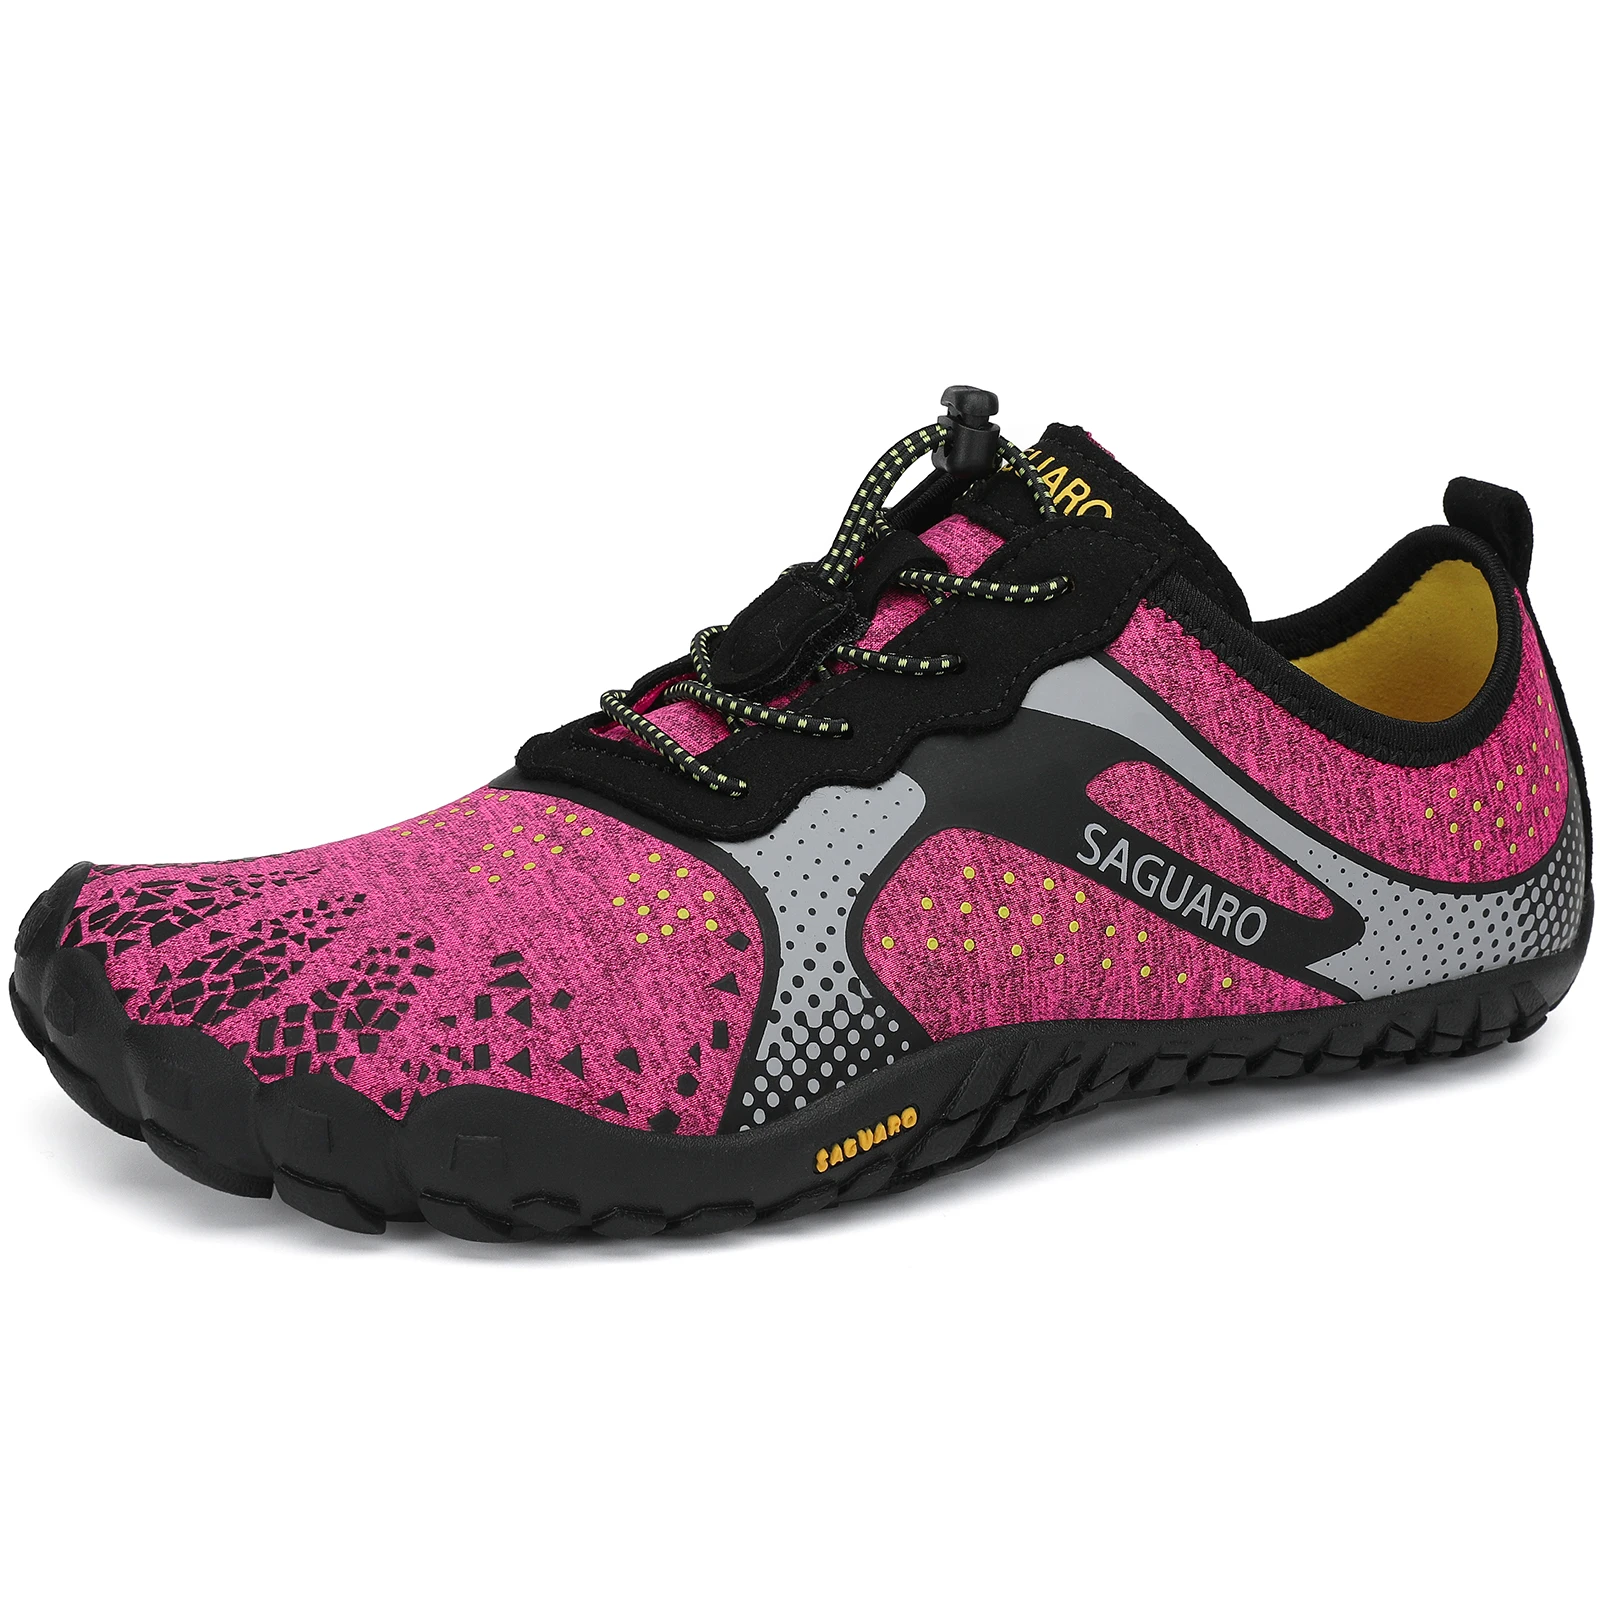 

2021 Wholesale Women Men Anti-slip Athletic Sports Shoes for Hiking Exercising Running, Black,blue,grey,orange,rose,white,assortedcolor